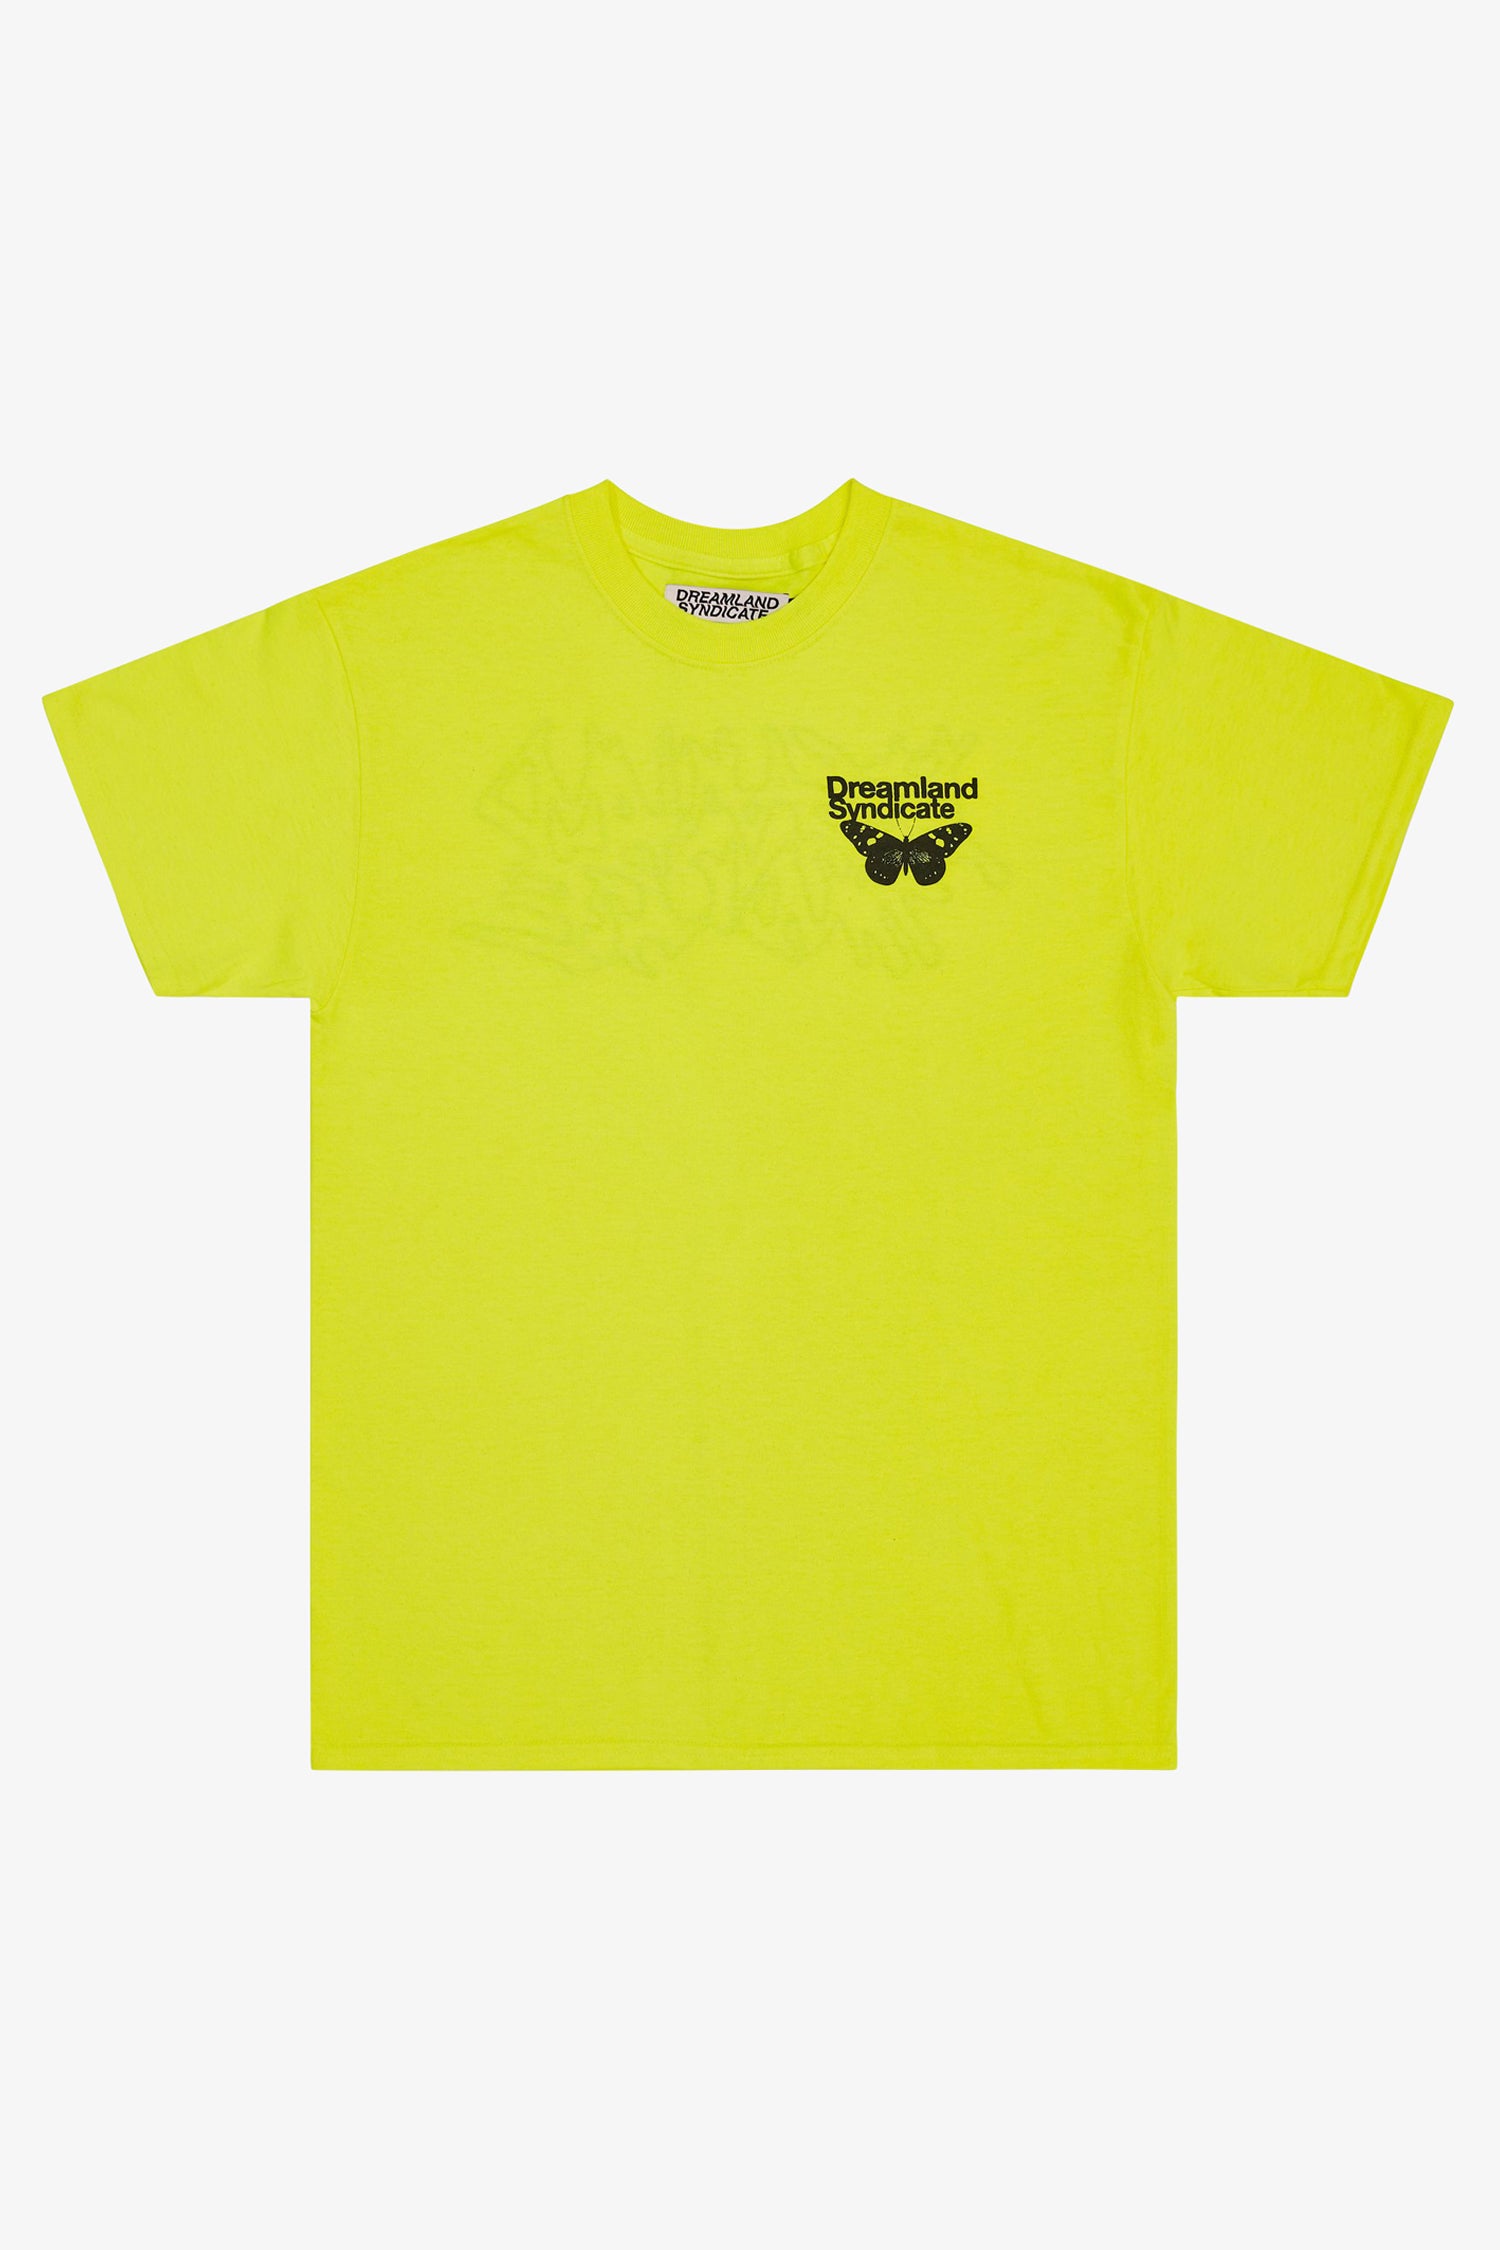 Selectshop FRAME - DREAMLAND SYNDICATE Butterfly Tee T-Shirts Dubai